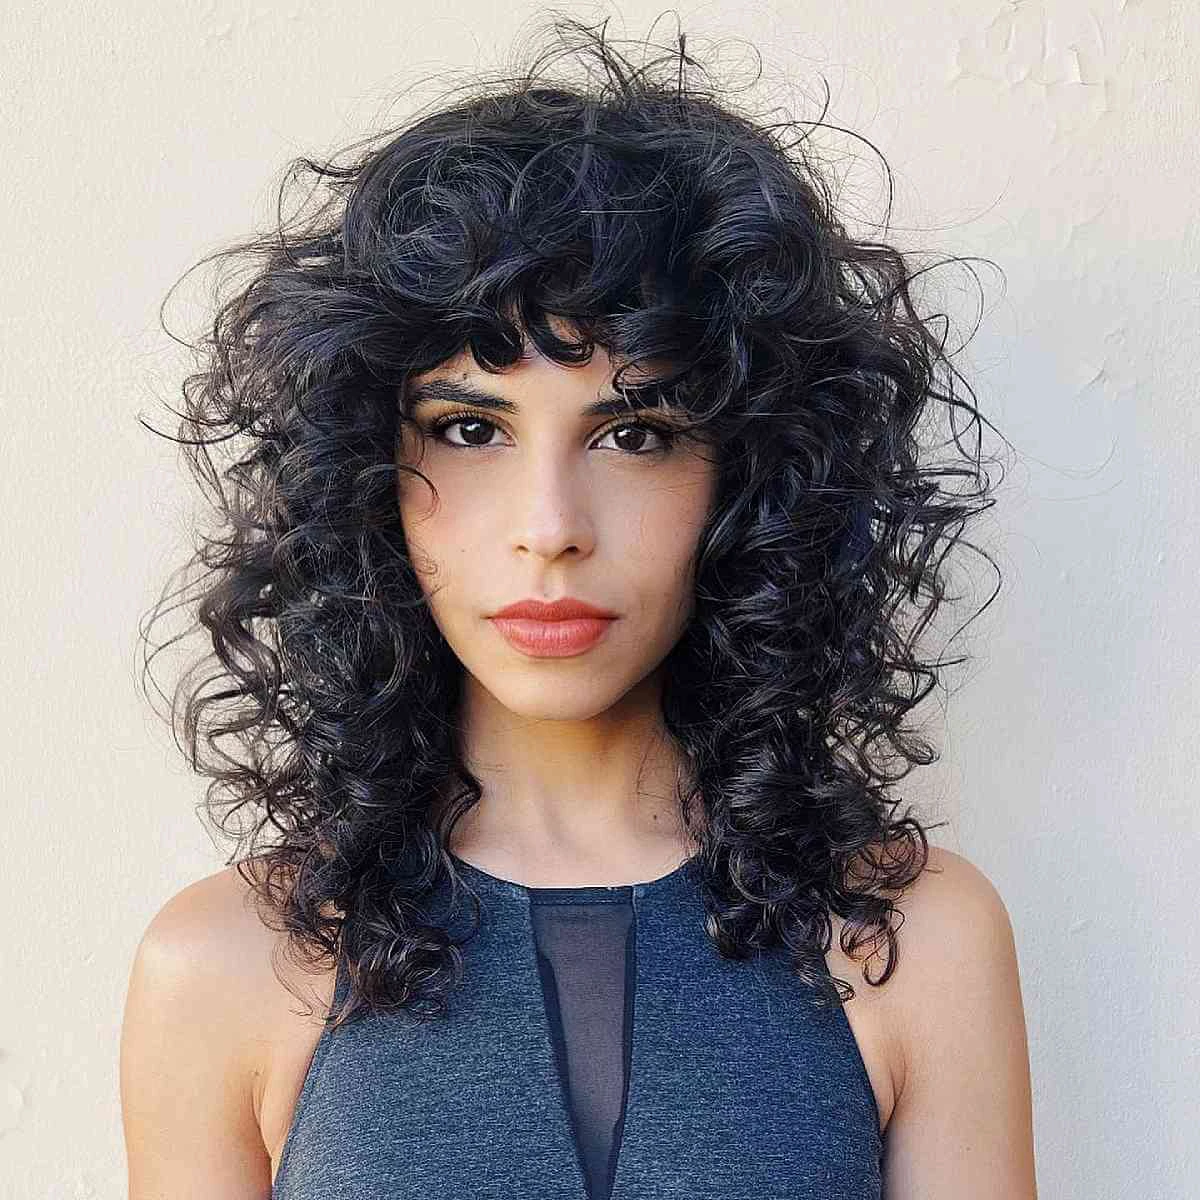 shag with black curly hair